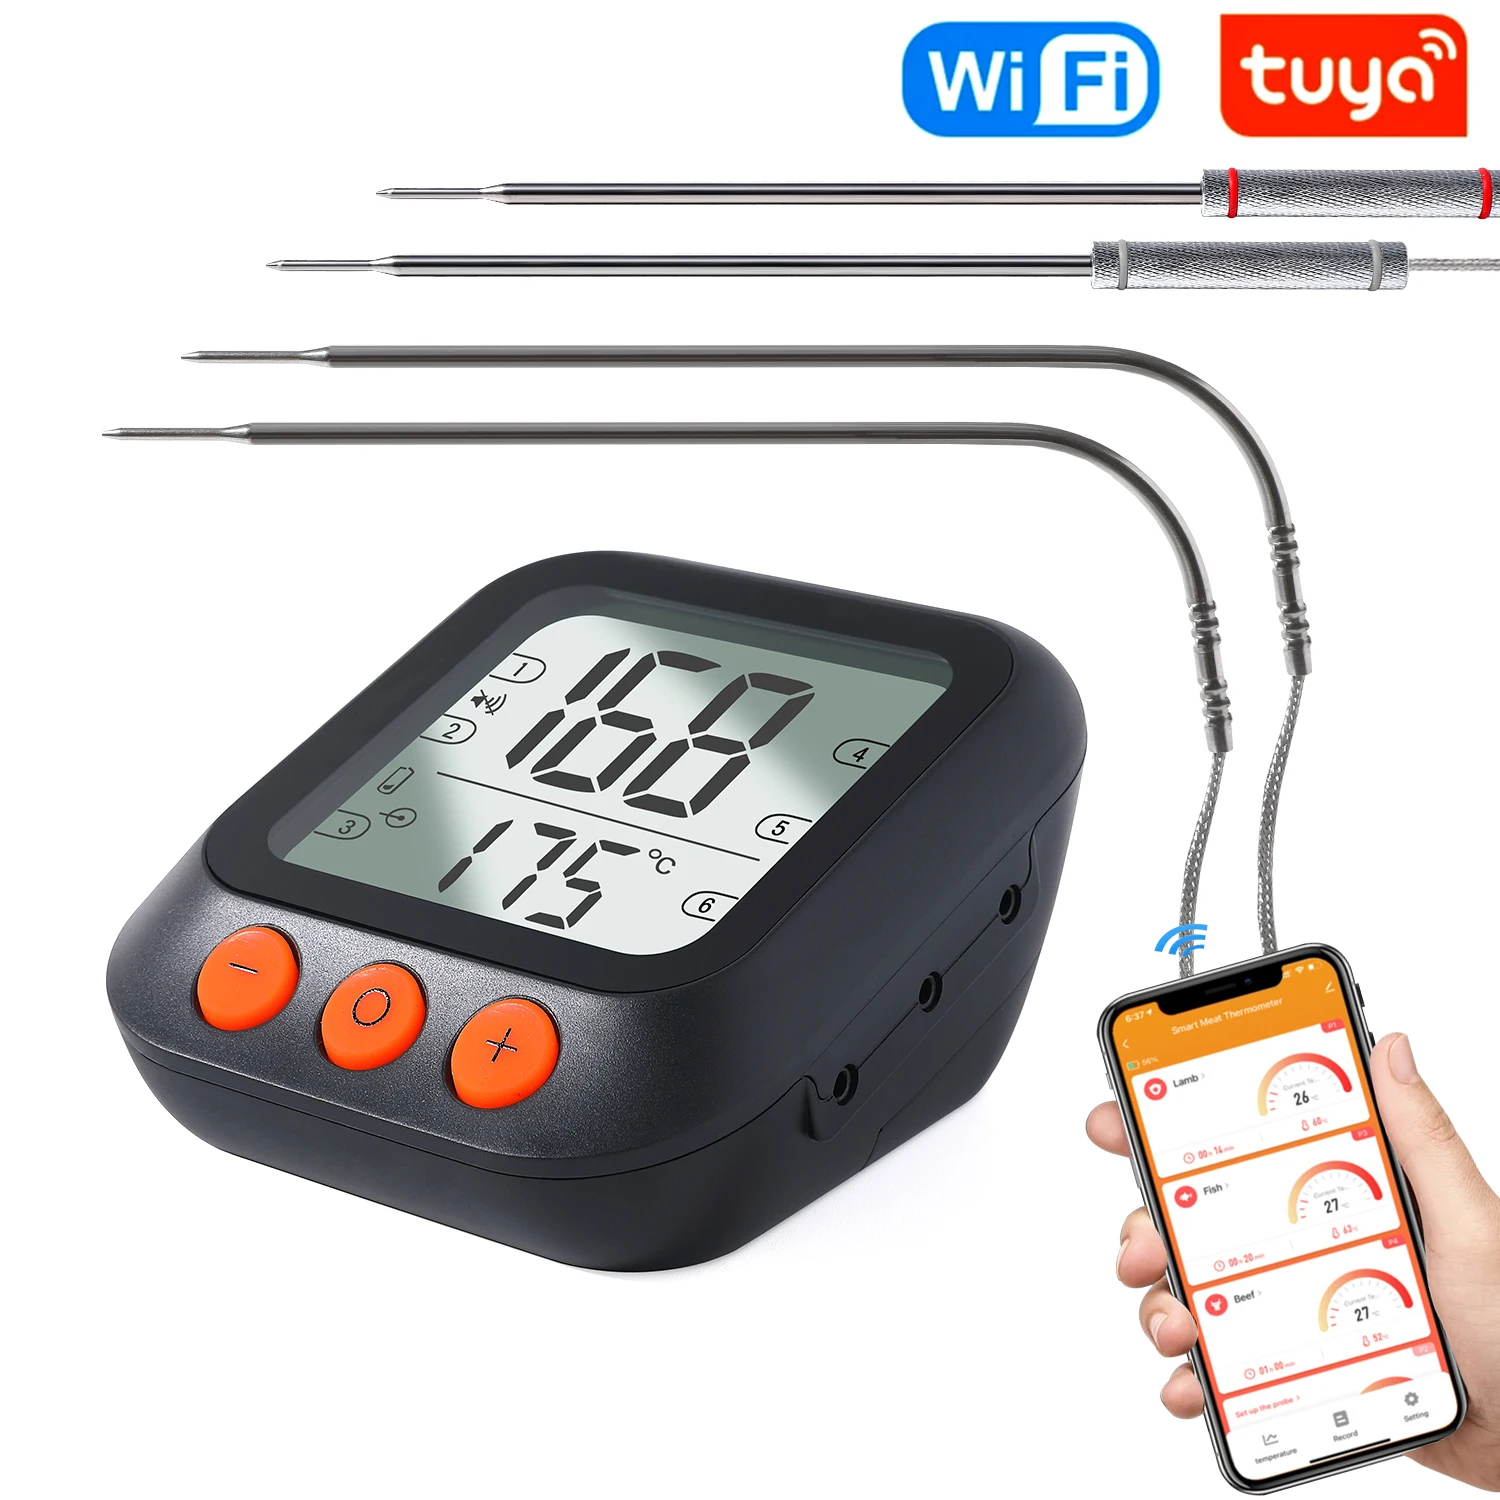 Tuya Wifi smart barbecue barbecue thermometer Tuya smart life mobile phone APP control water temperature measurement